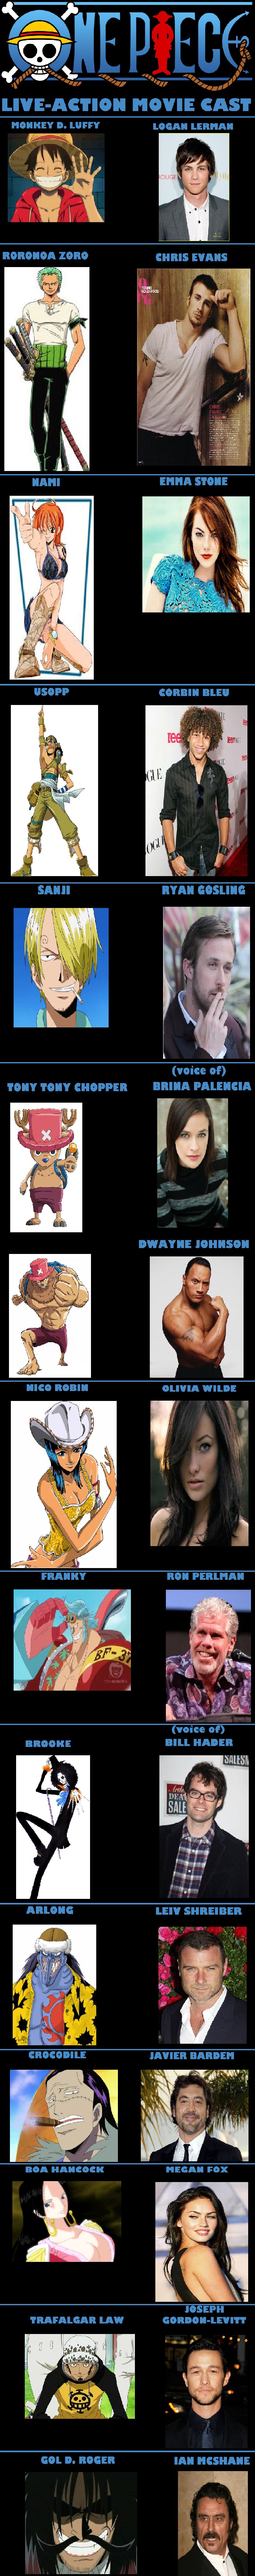 One Piece Live Action Movie Cast